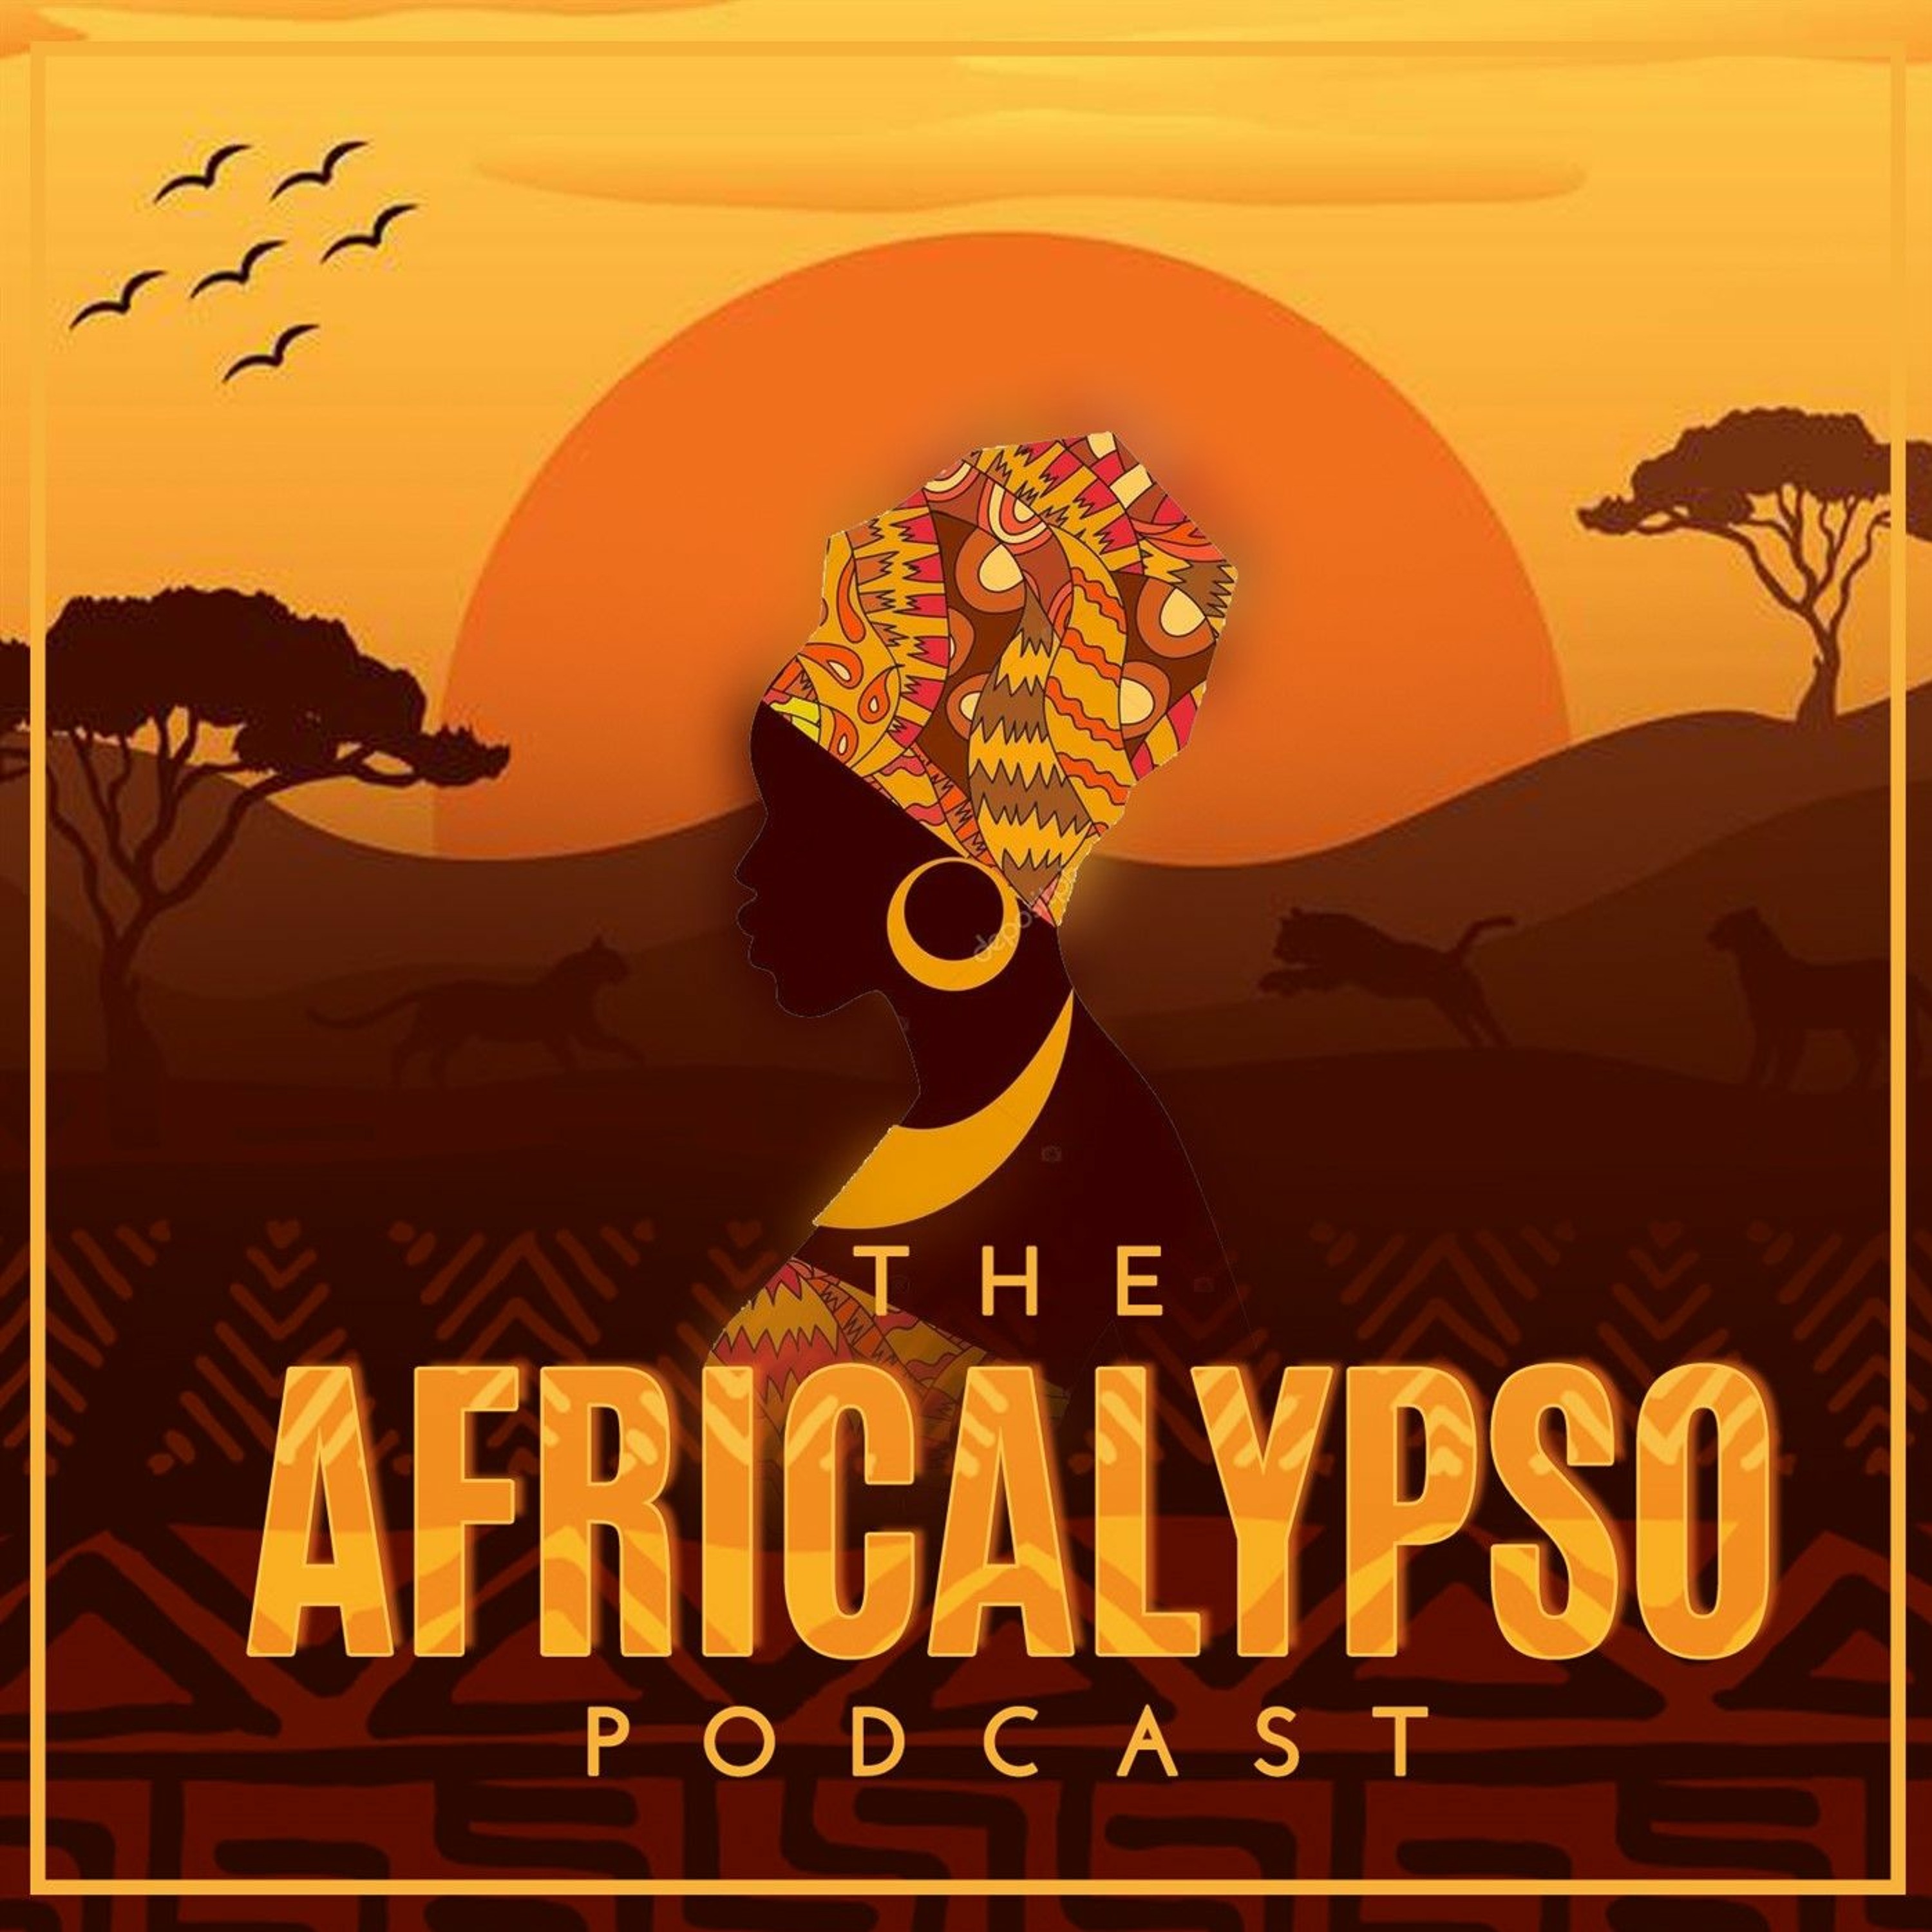 Episode 39 - "Giants of Africa"